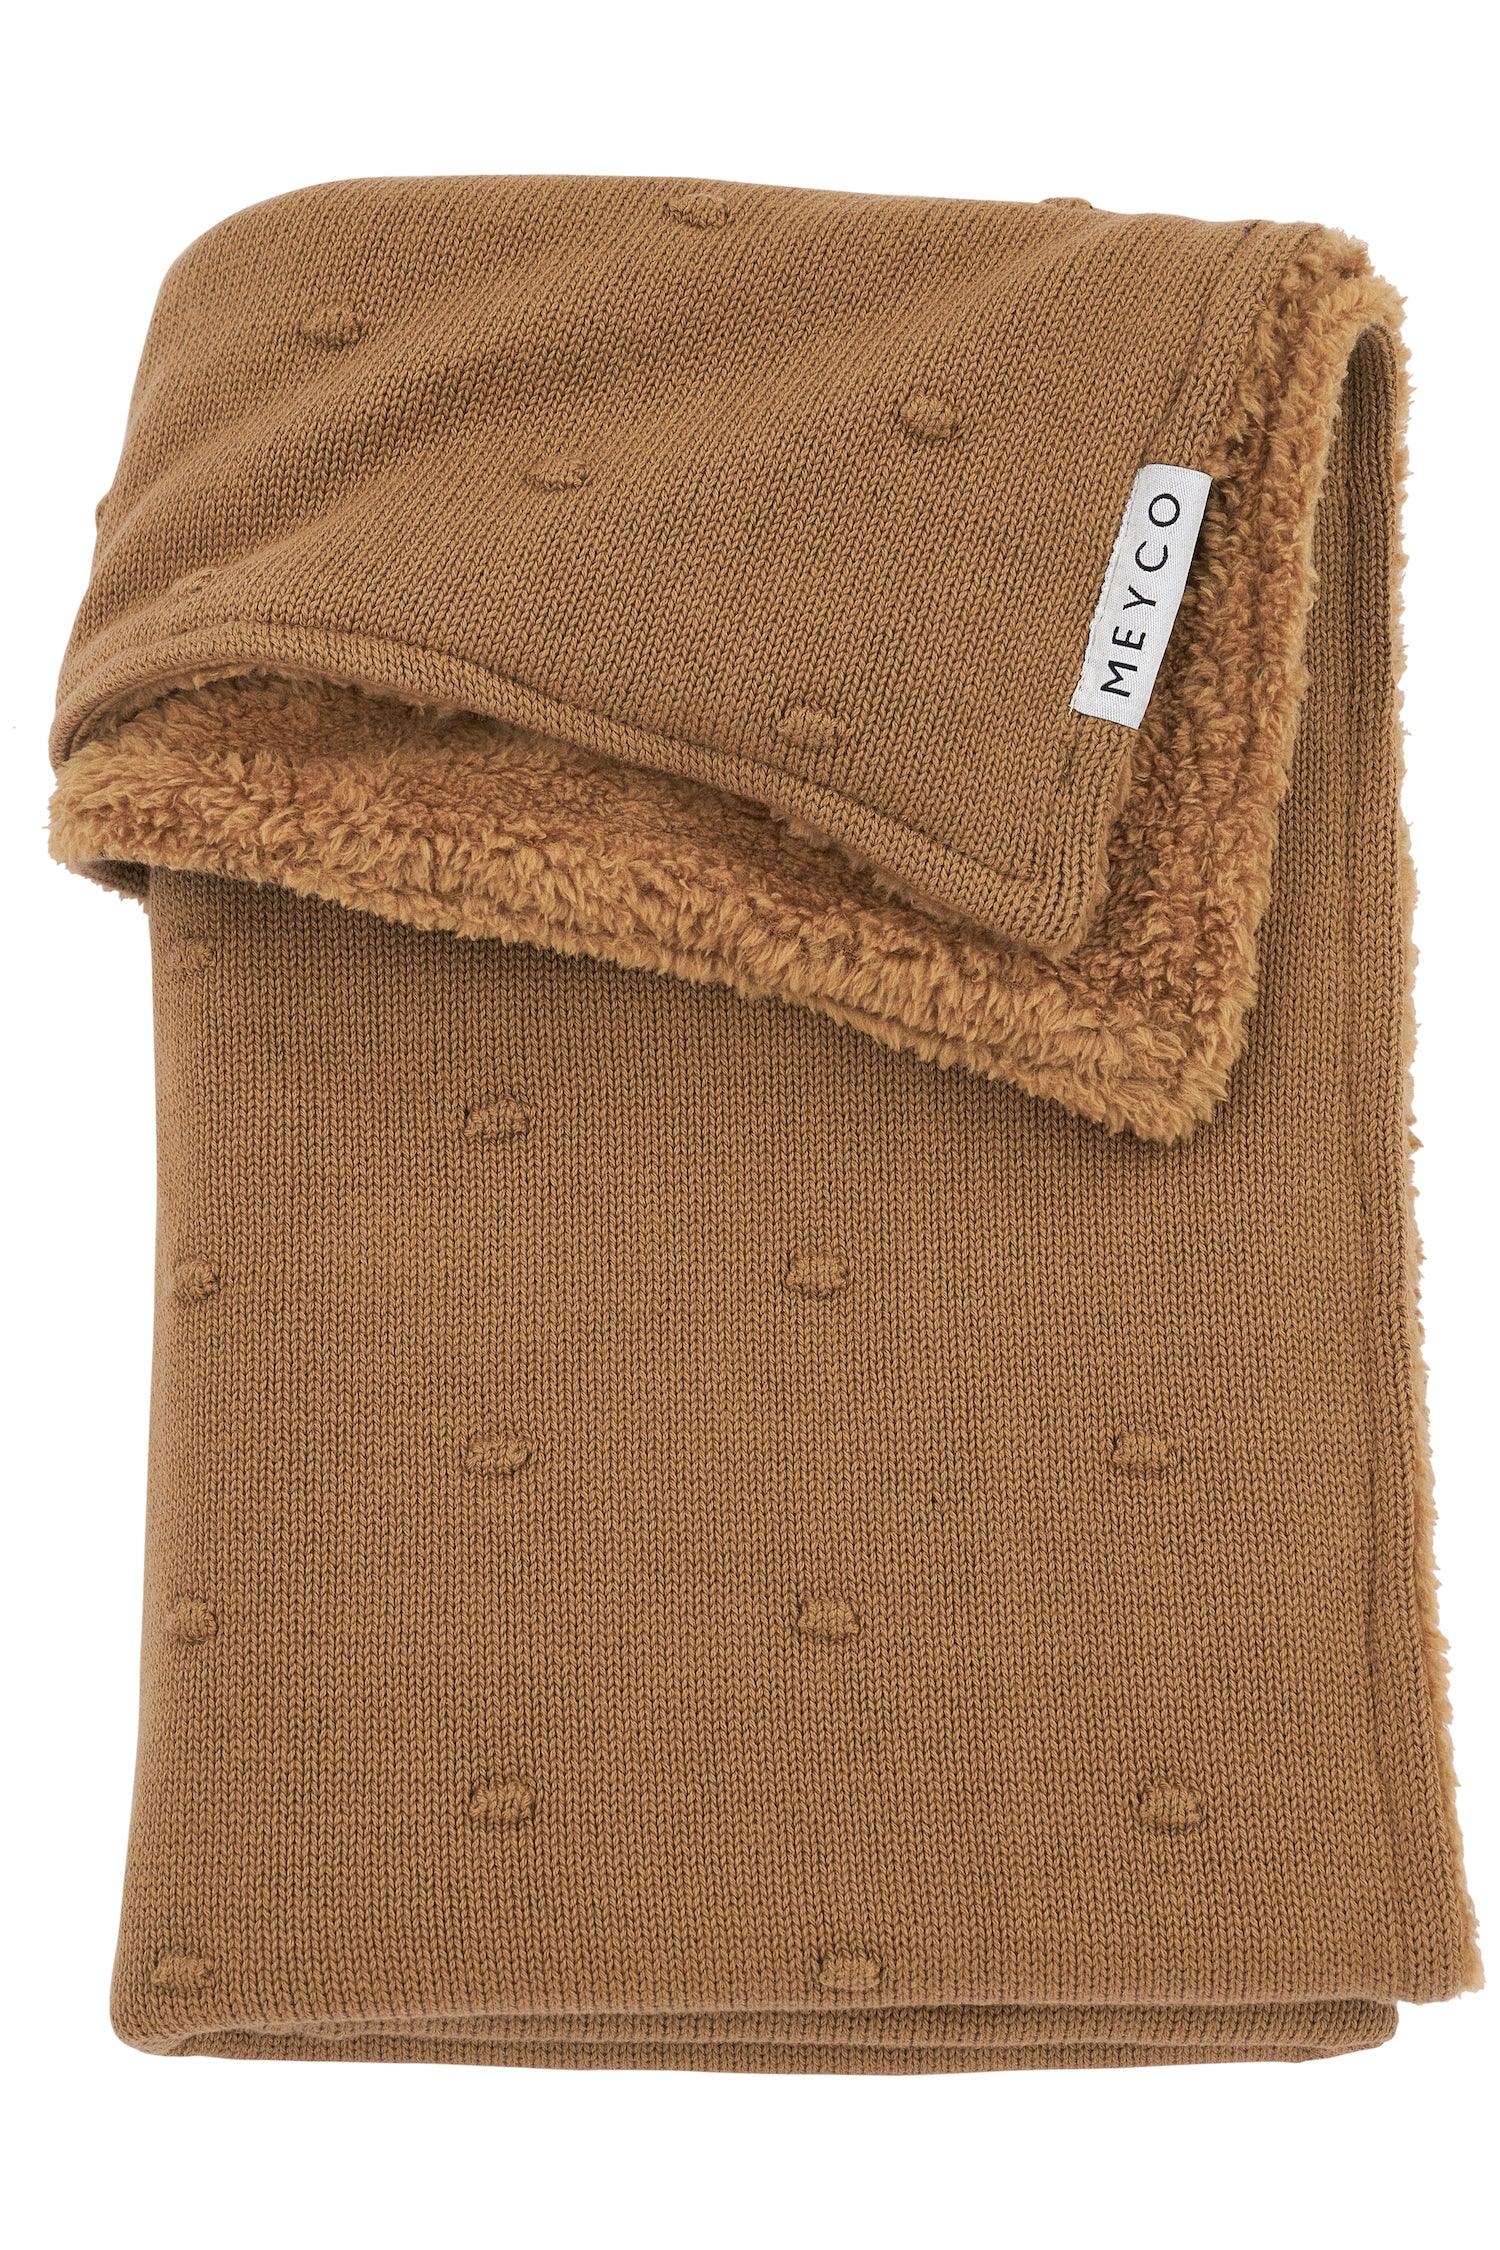 Crib Blanket Velvet Knots Teddy - Toffee 75x100cm - Mari Kali Stores Cyprus